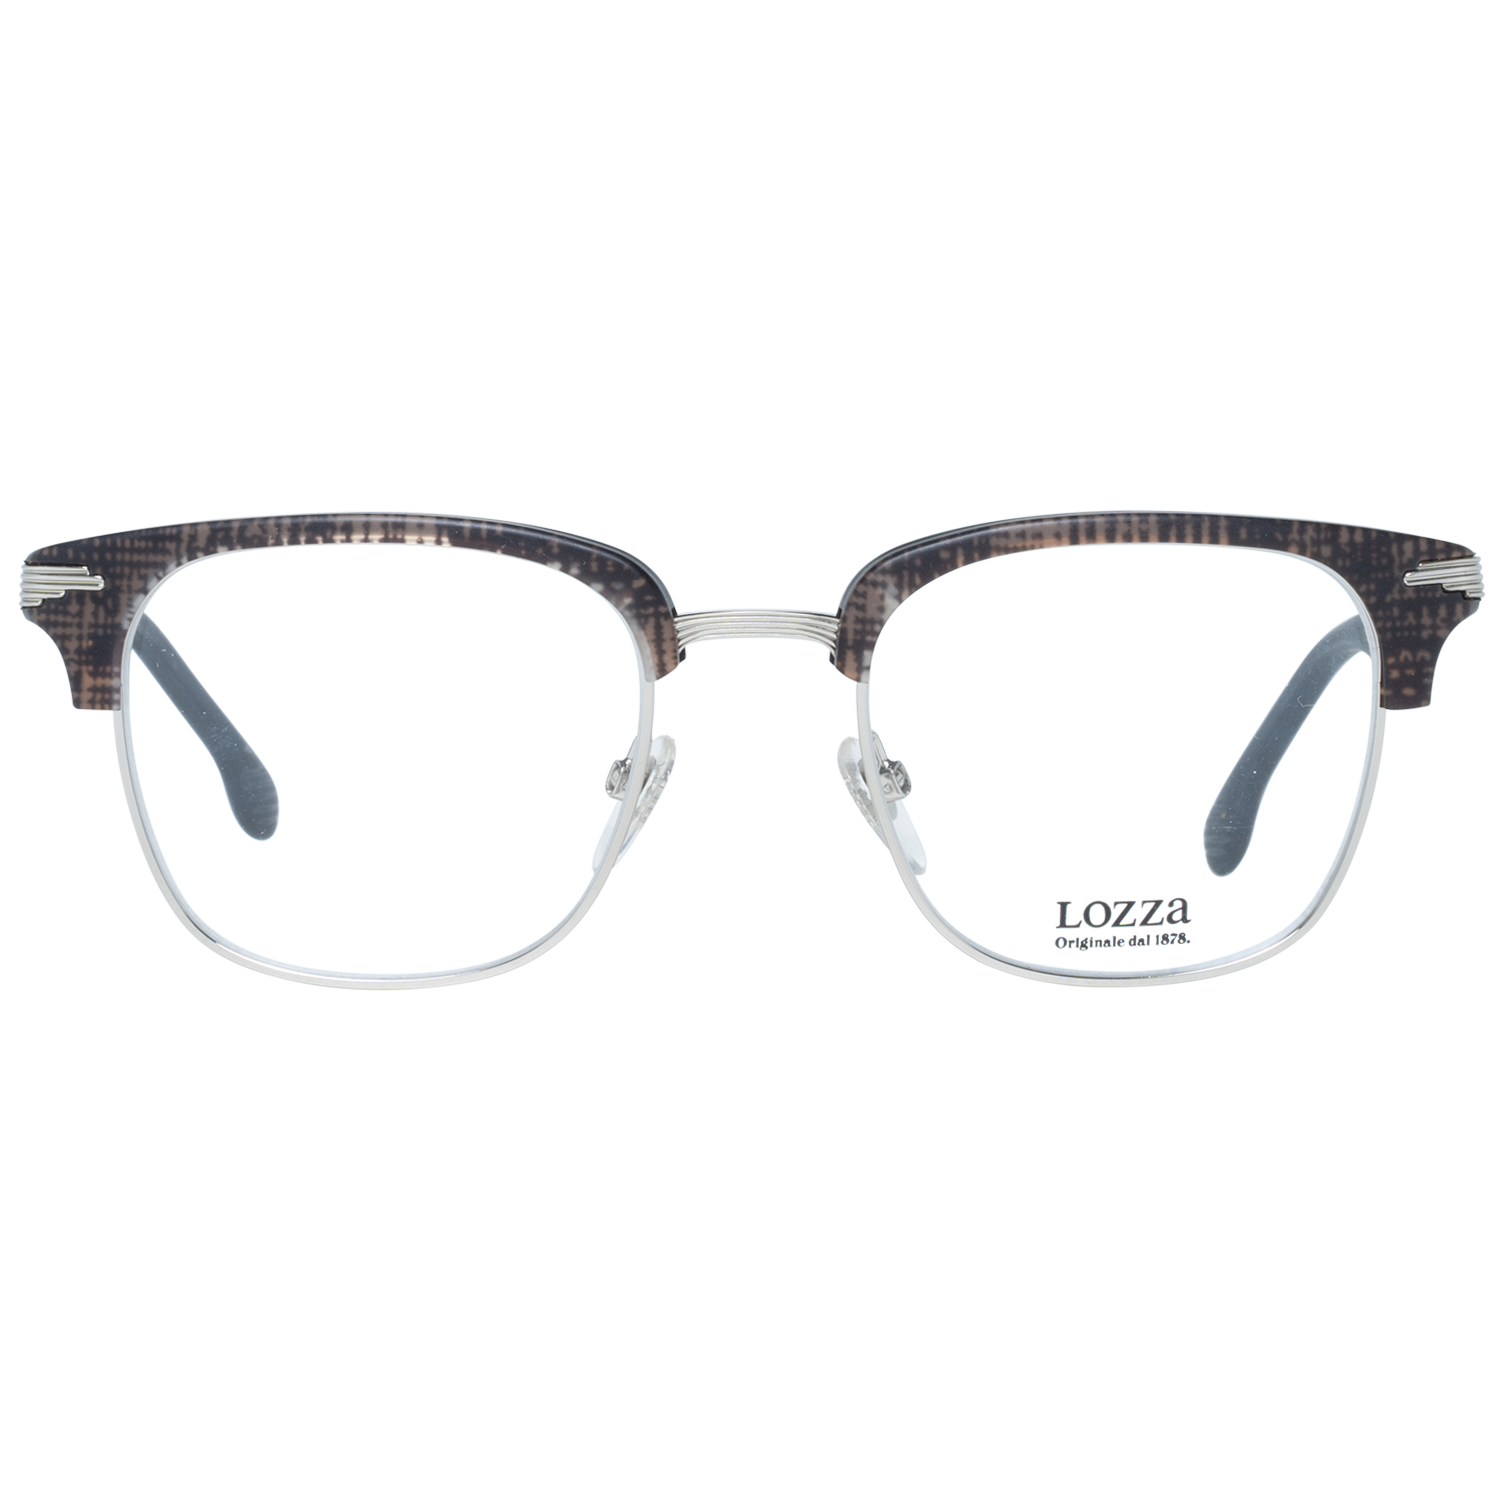 Lozza Frames Lozza Optical Frame VL2275 0579 50 Eyeglasses Eyewear UK USA Australia 